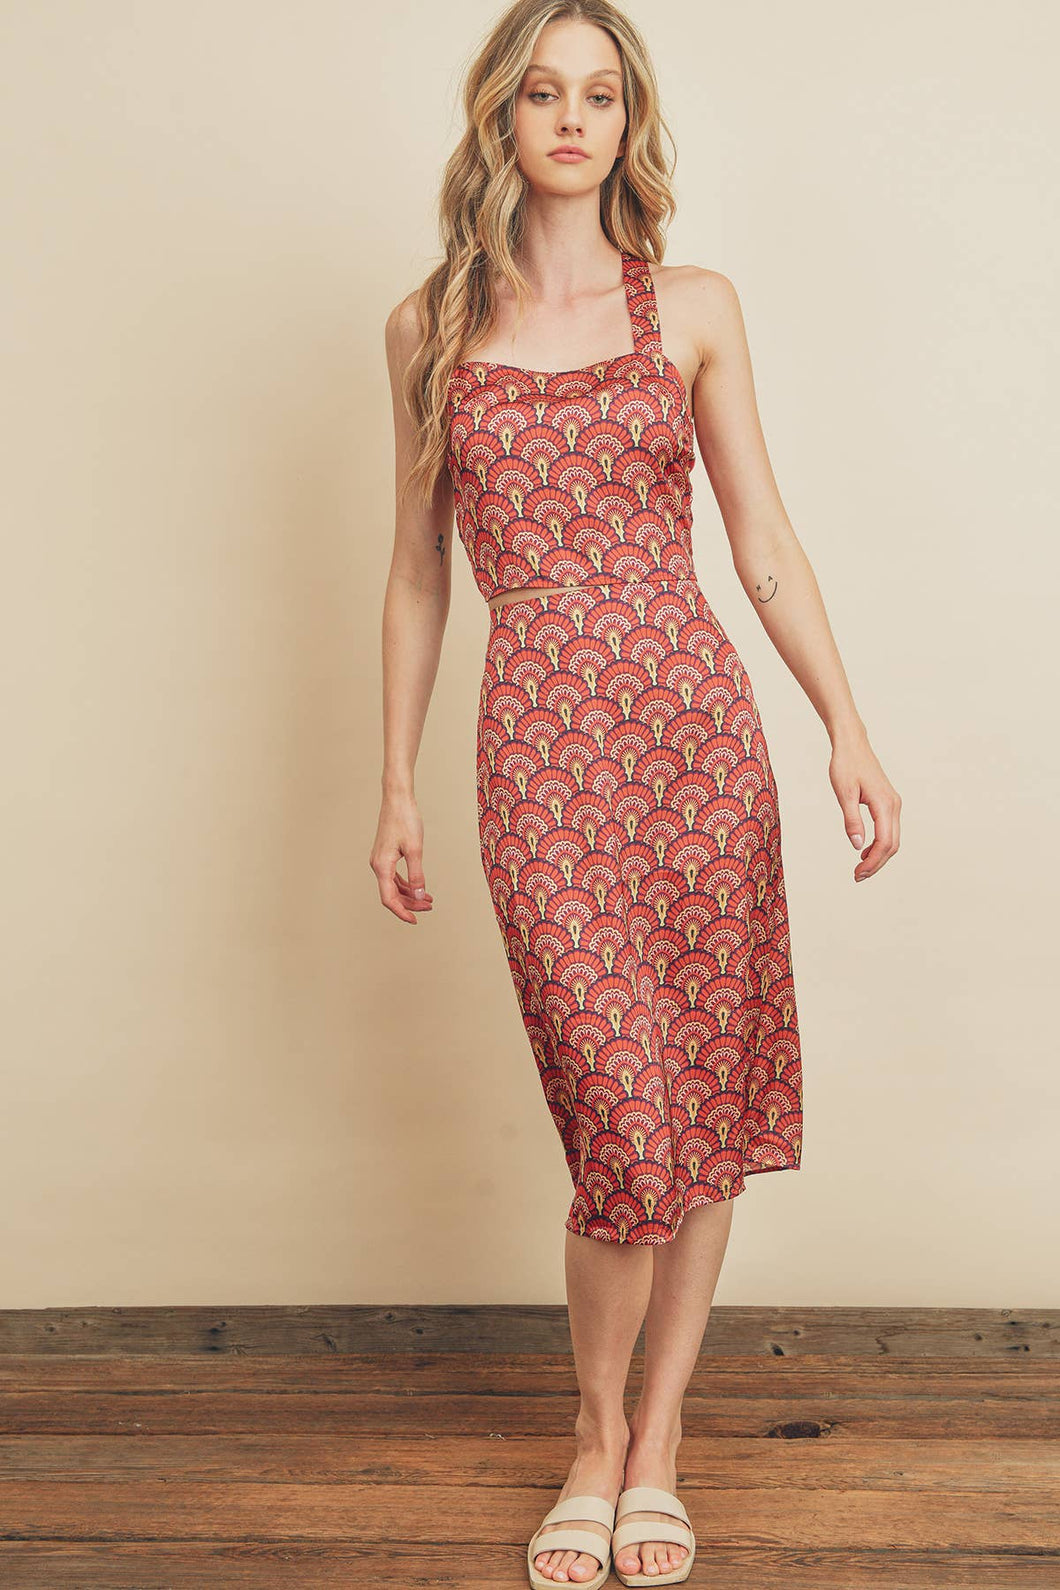 FS9590 - S - Midi skirt in traditional Japanese pattern inspired p